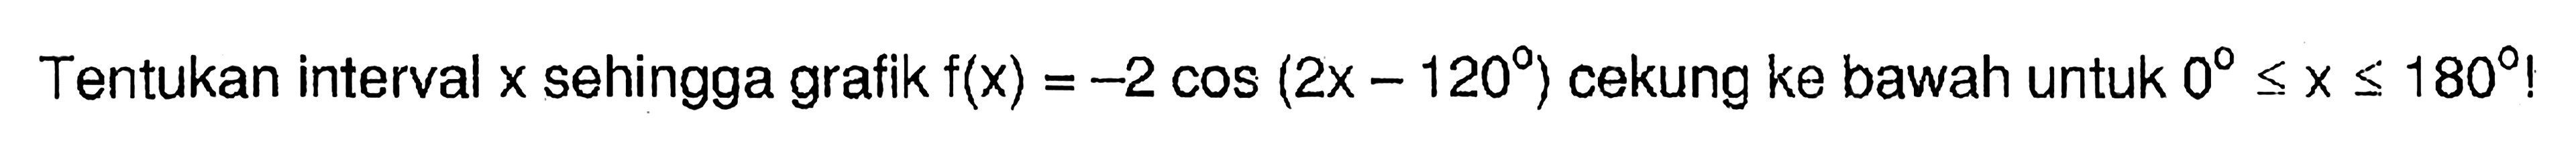 Tentukan interval x sehingga grafik f(x)=-2cos(2x-120) cekung ke bawah untuk 0<=x<=180 !